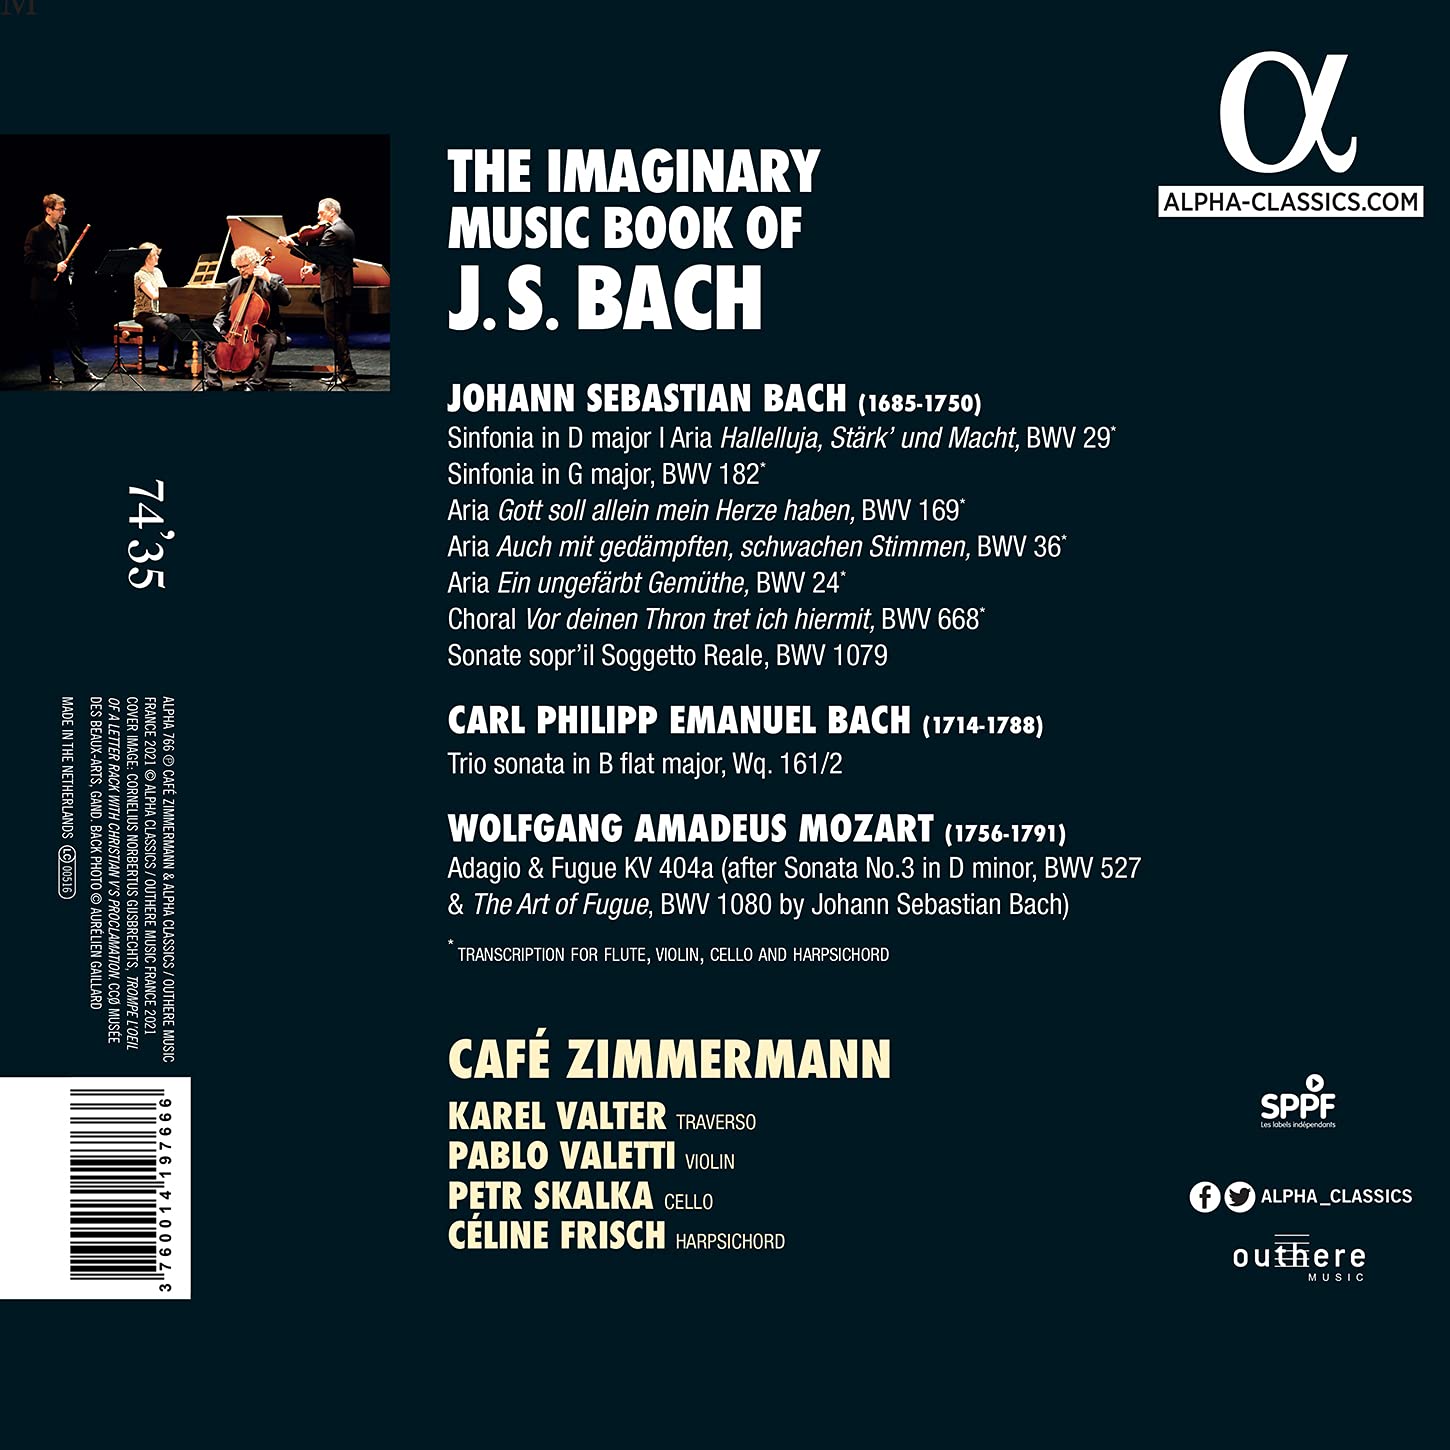 Cafe Zimmermann 바흐: 신포니아 BWV29, BWV182 (The Imaginary Music Book Of J.S.BACH)